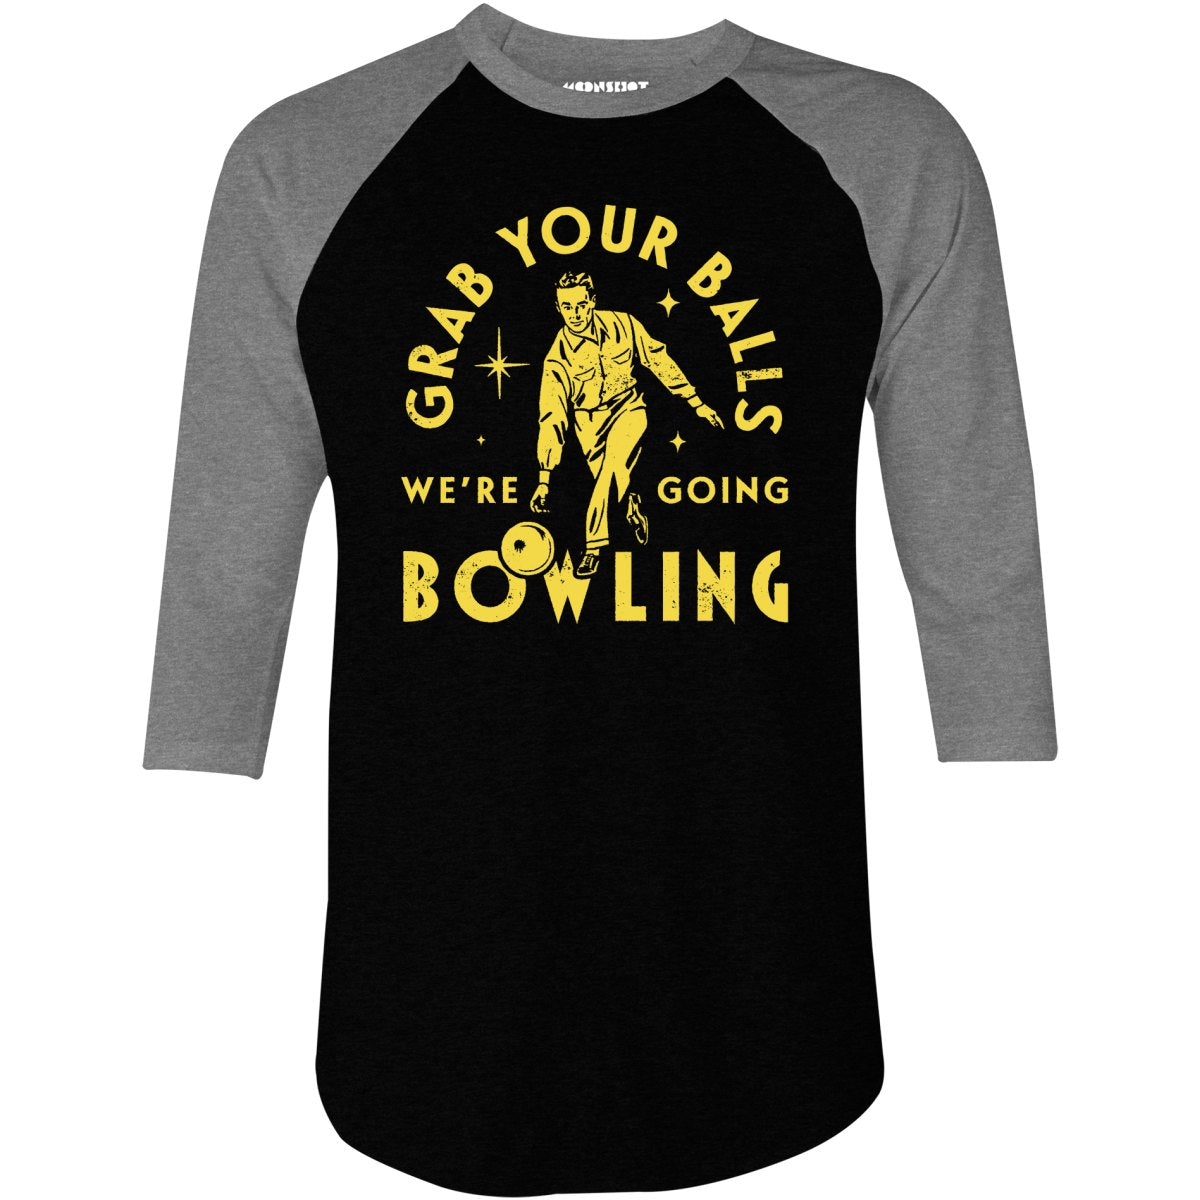 Grab Your Balls We're Going Bowling - 3/4 Sleeve Raglan T-Shirt